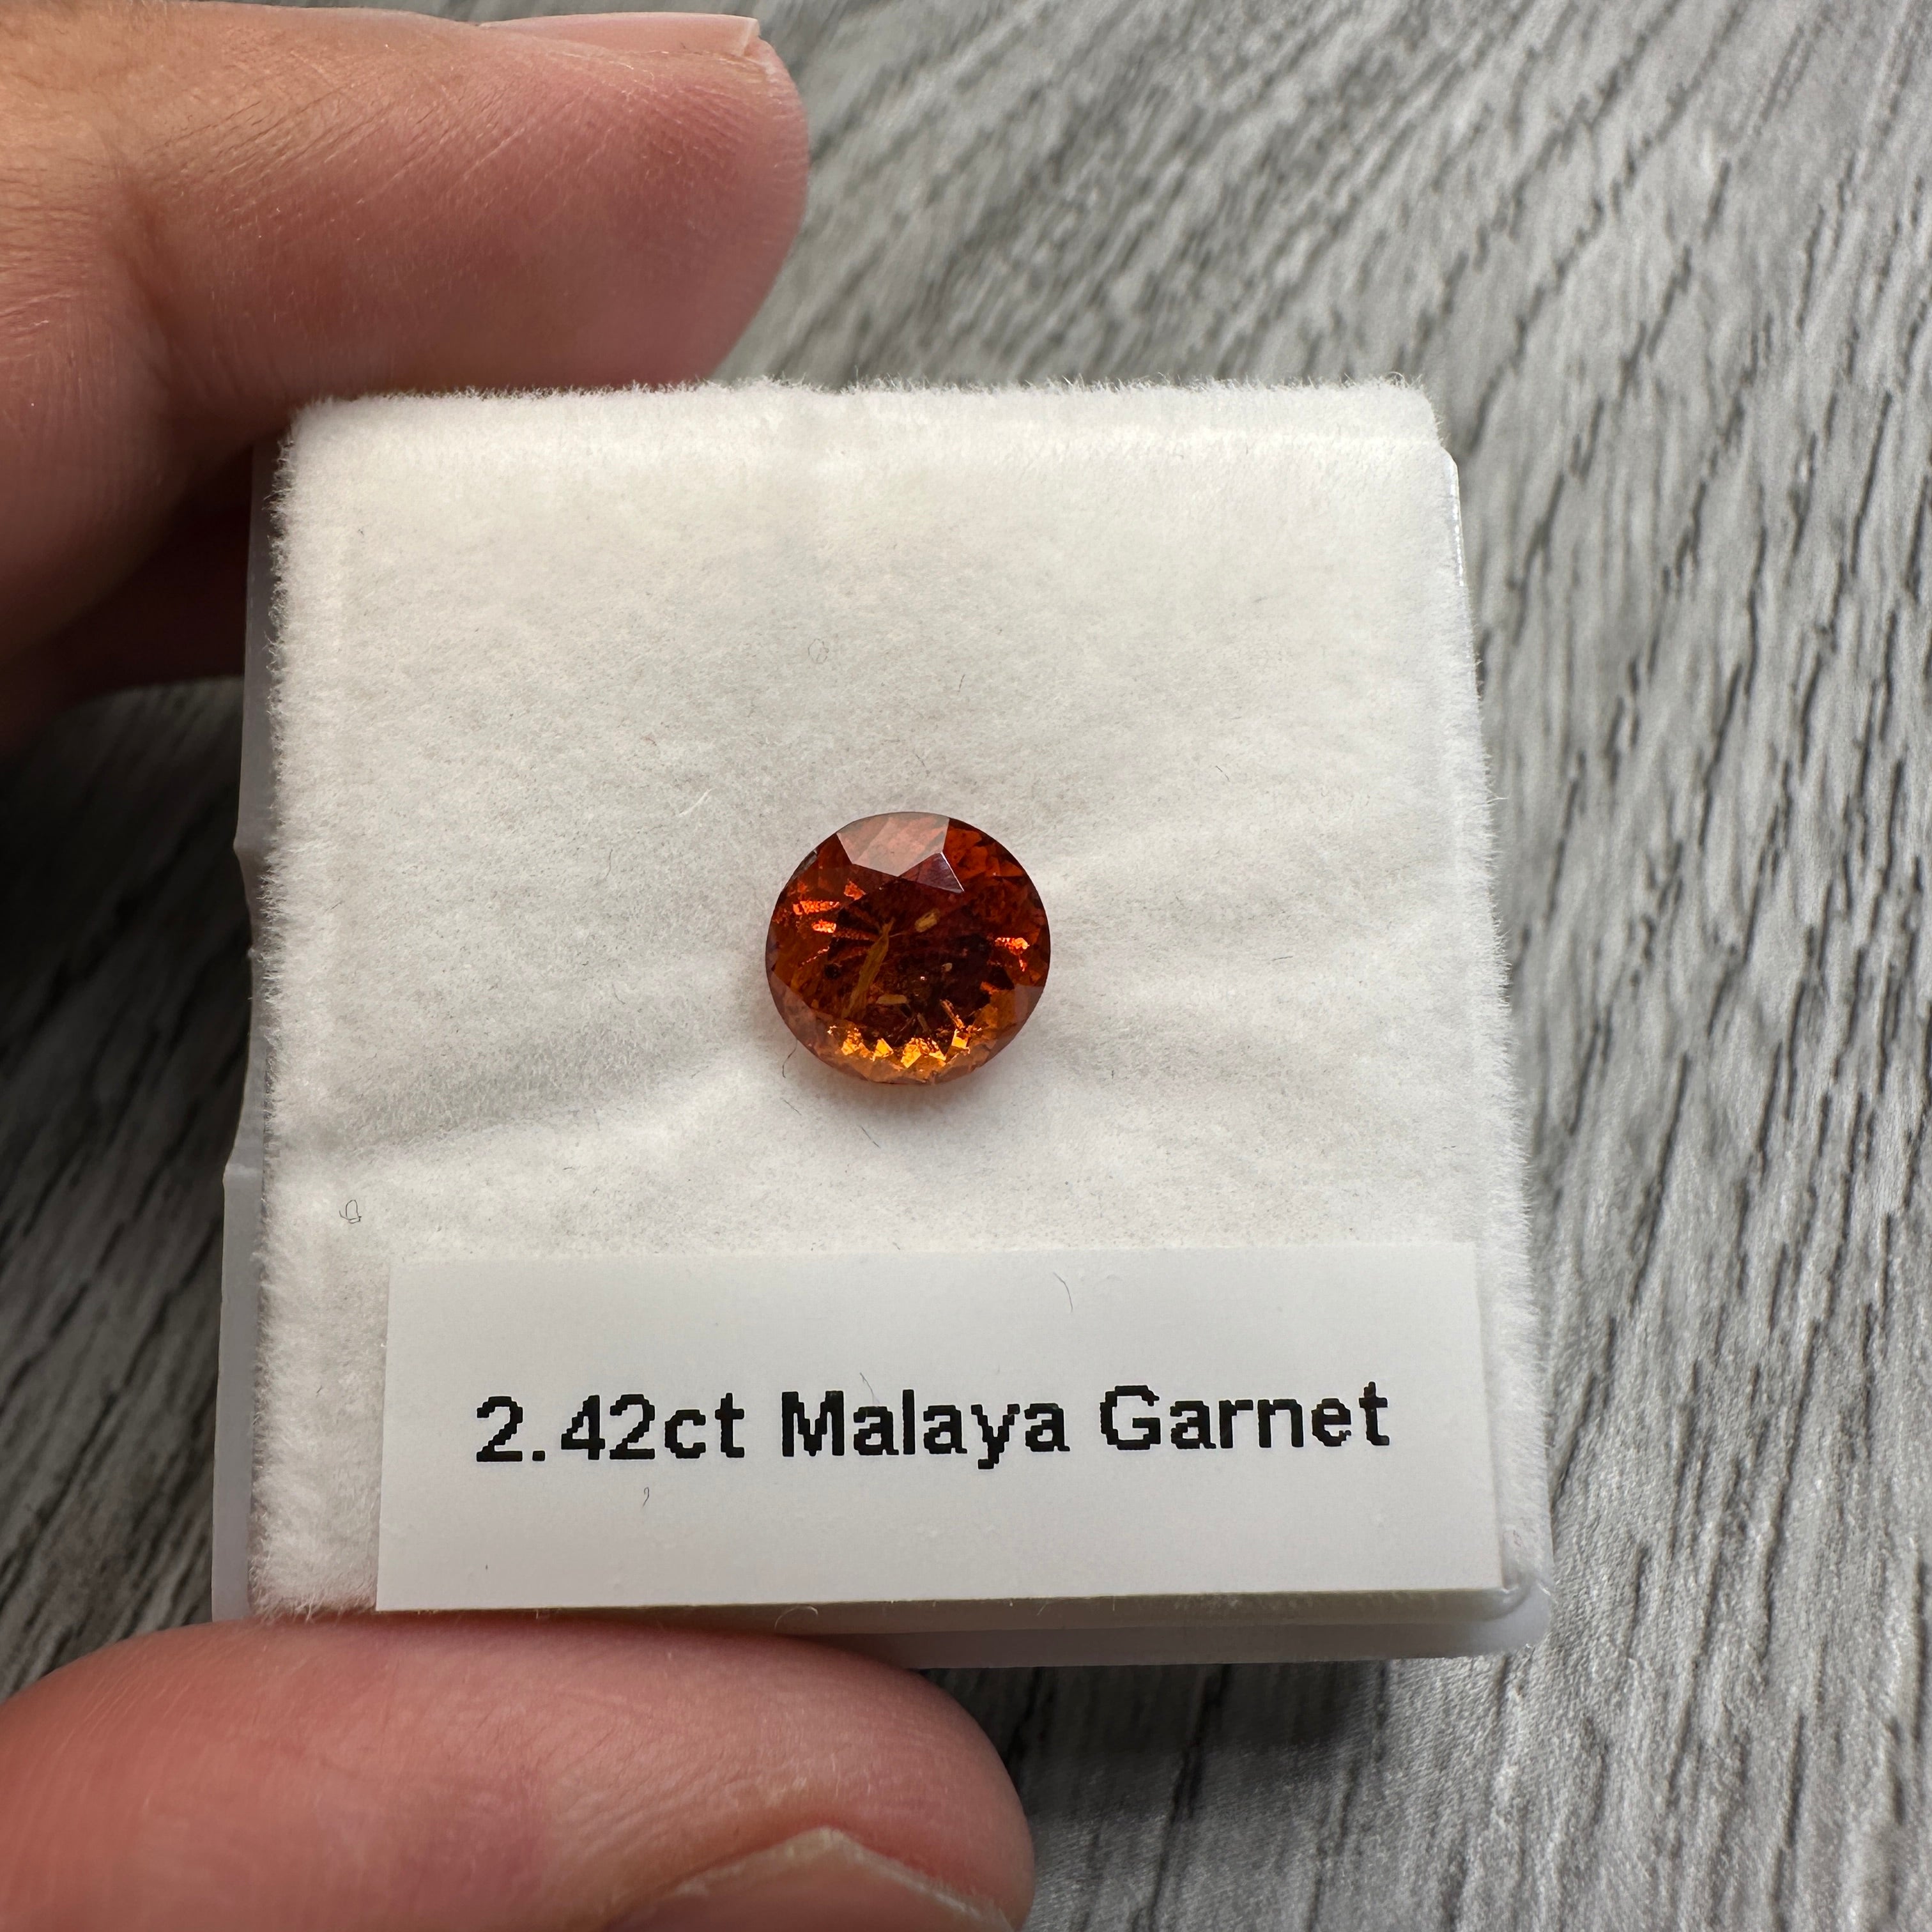 2.42ct Malaya Garnet, Untreated Unheated